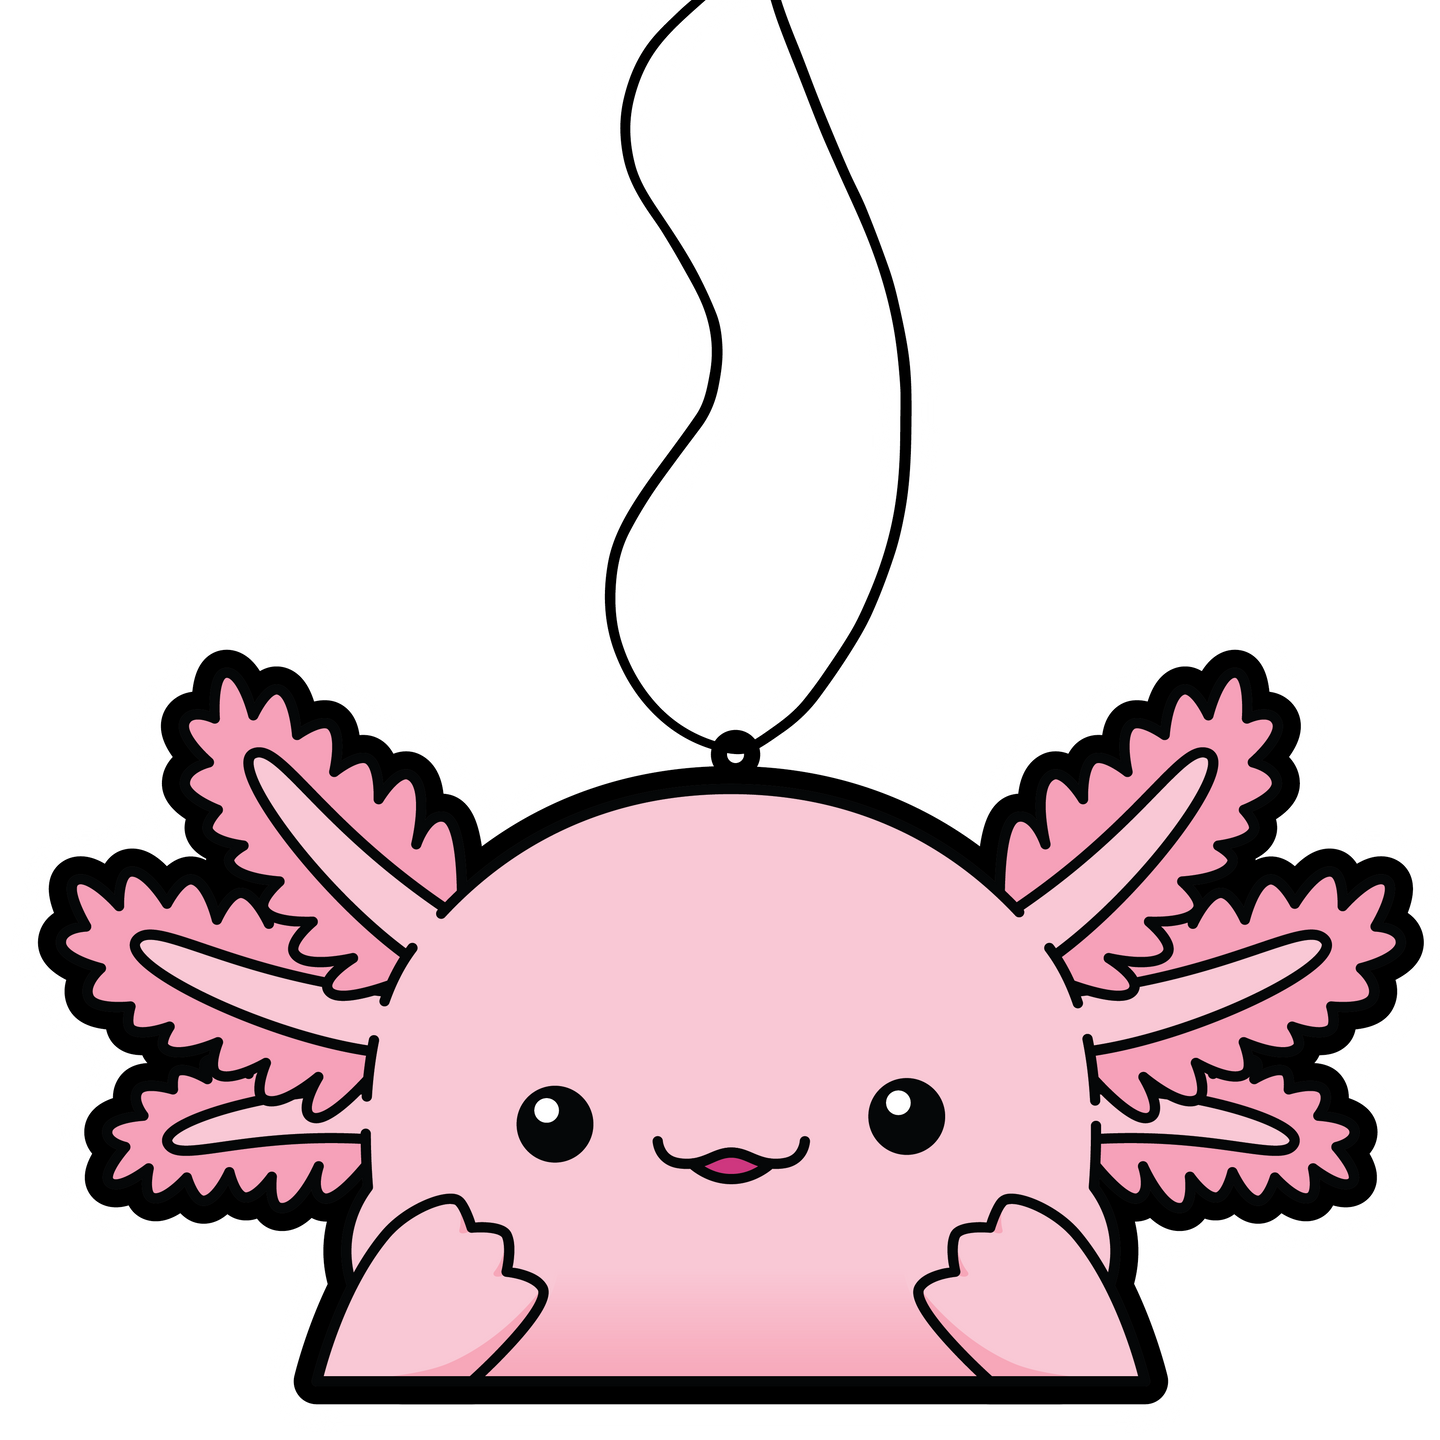 Pink Axolotl surprise expression hanging from black string air freshener.